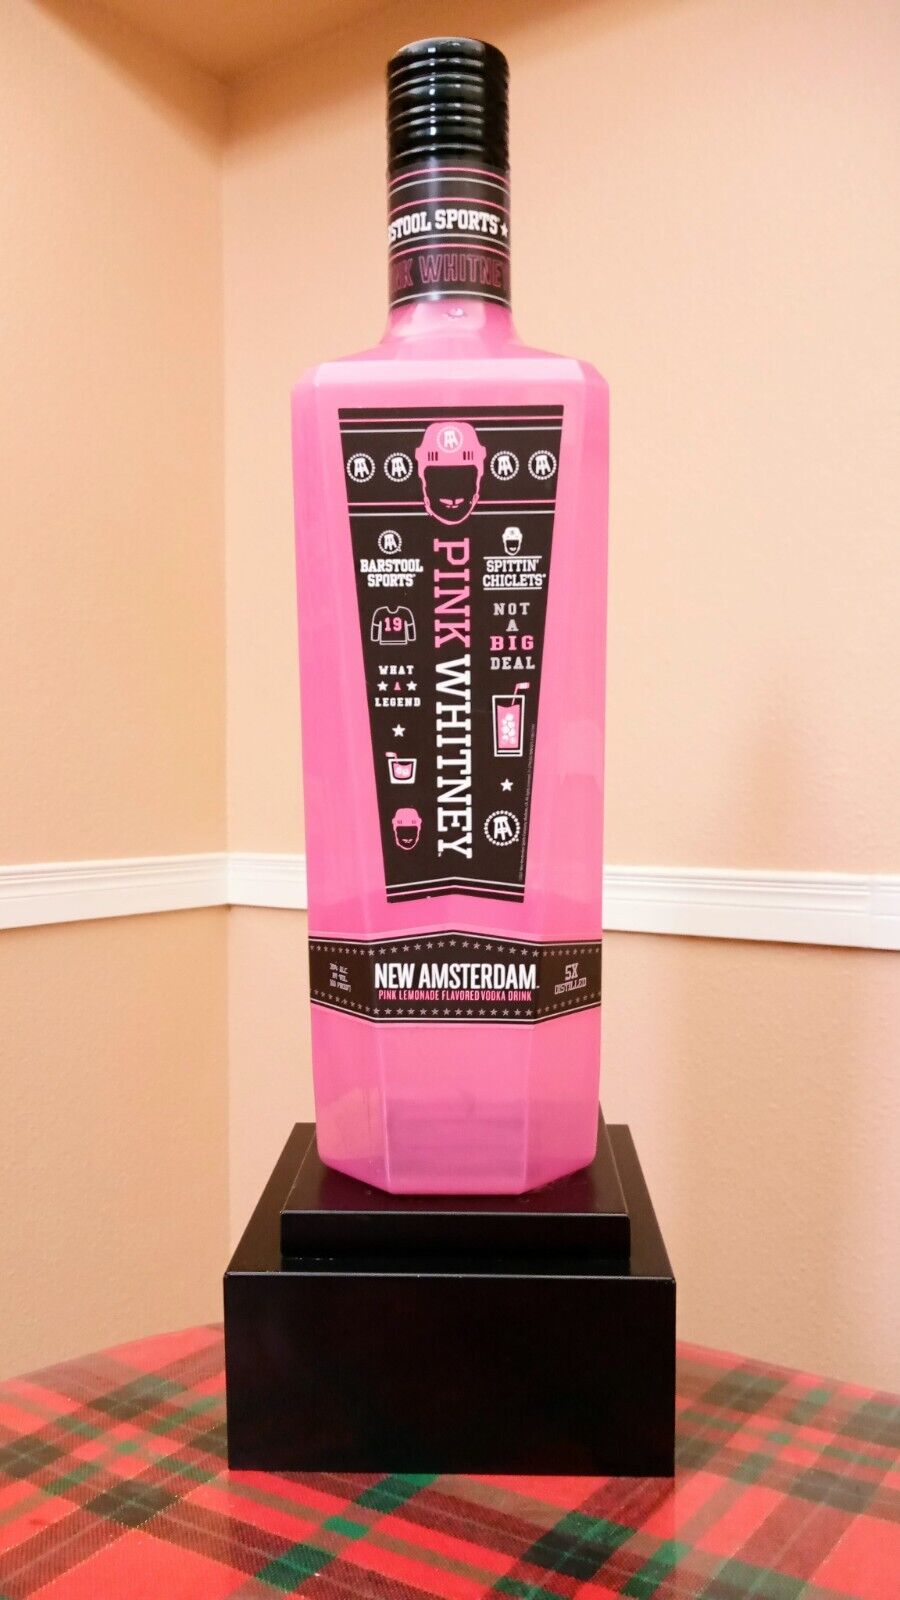 RARE Pink Whitney Display Bottle from Barstool Sports bar liquor advertisement